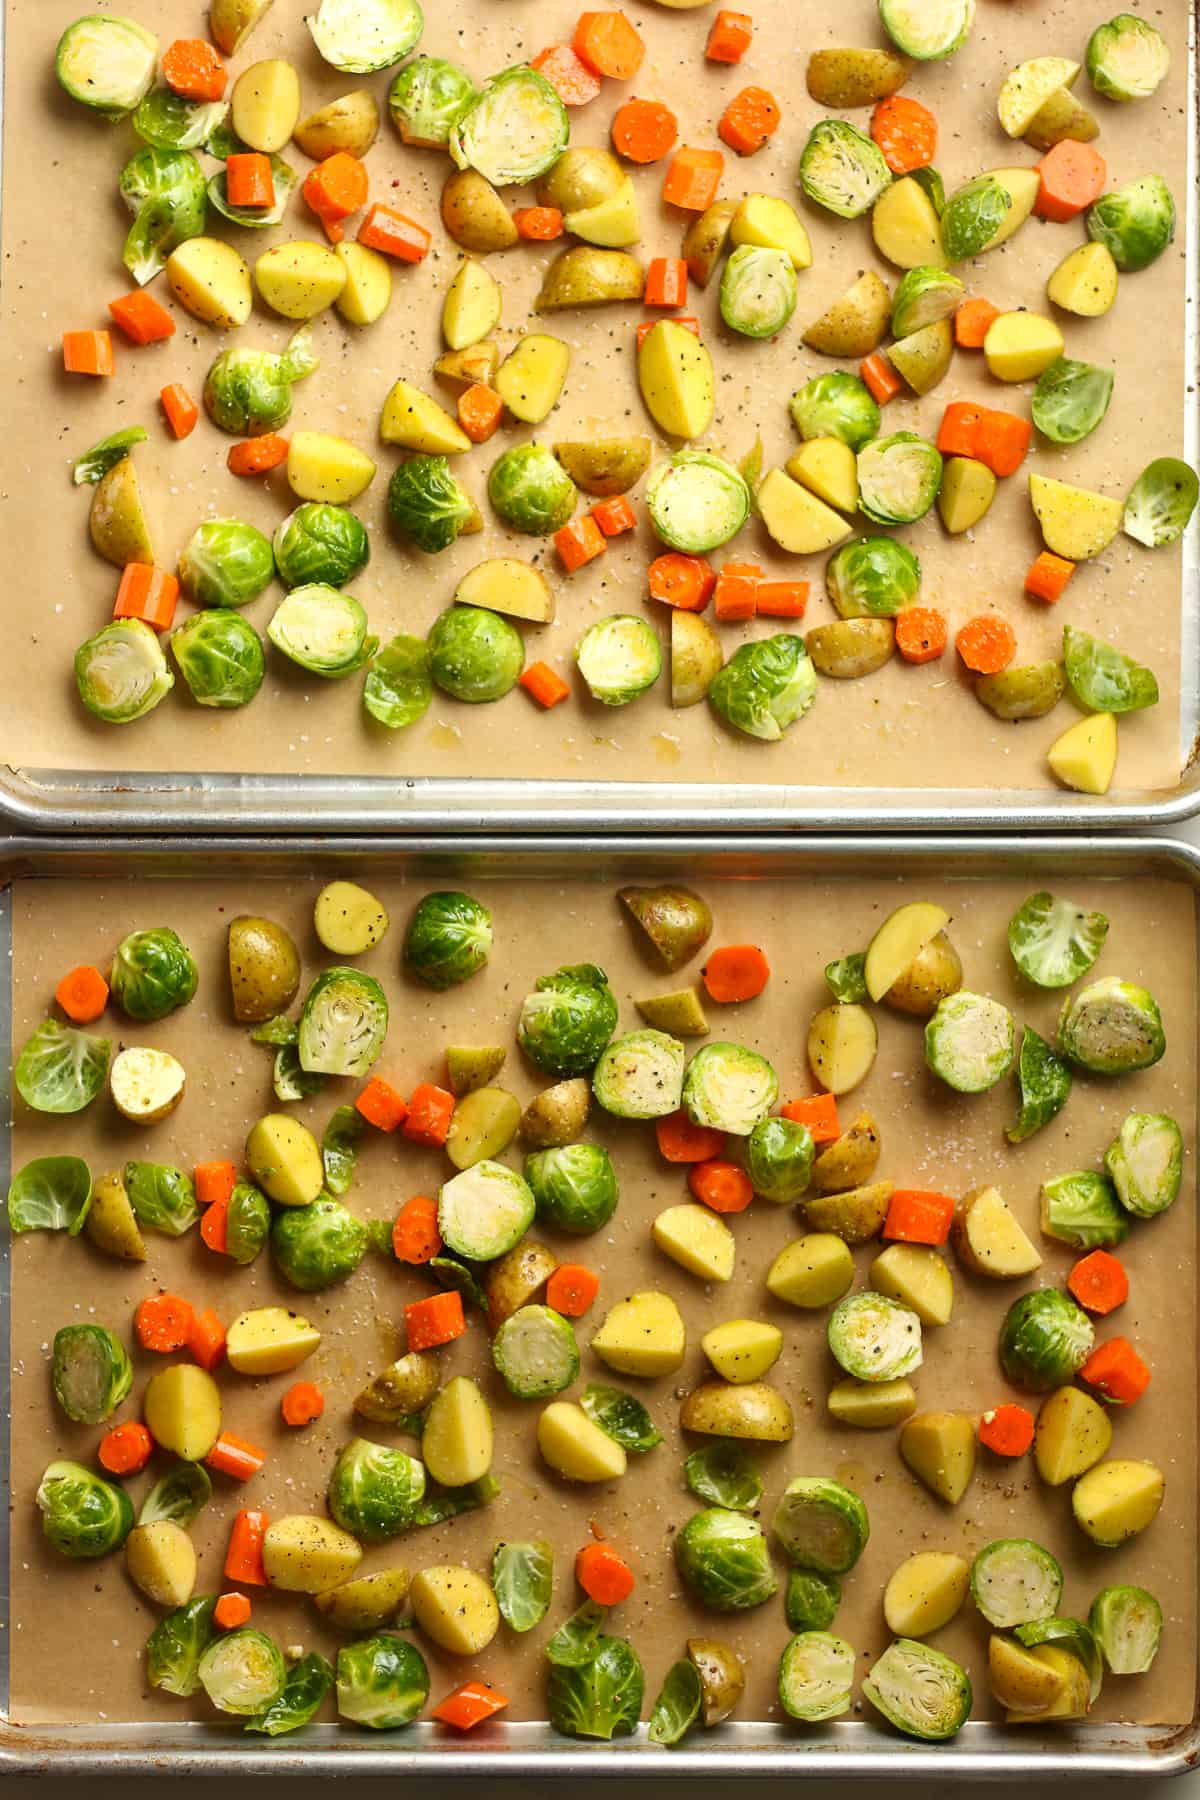 Two sheet pans of chopped veggies ready to roast.